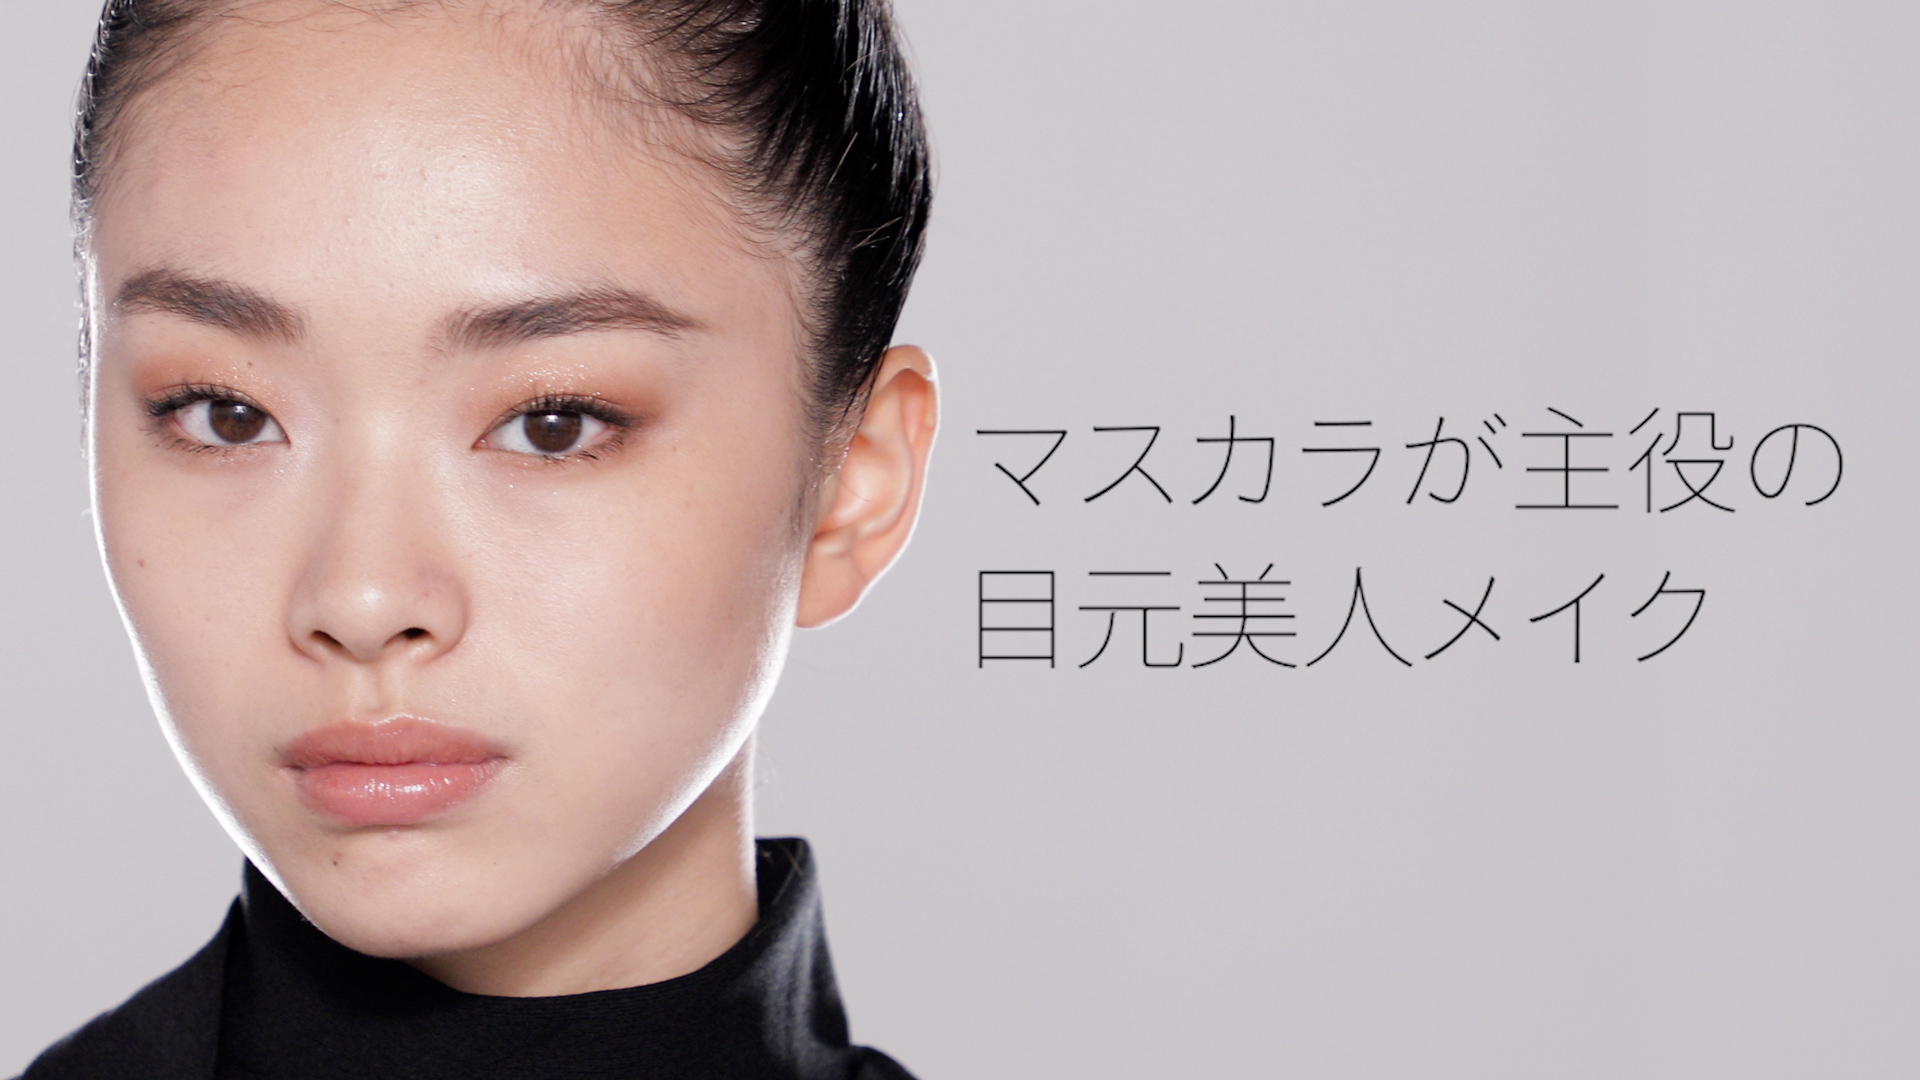 Nars Youtubeコンテンツ本日公開 マスカラで目元美人メイク Nars Japanのプレスリリース